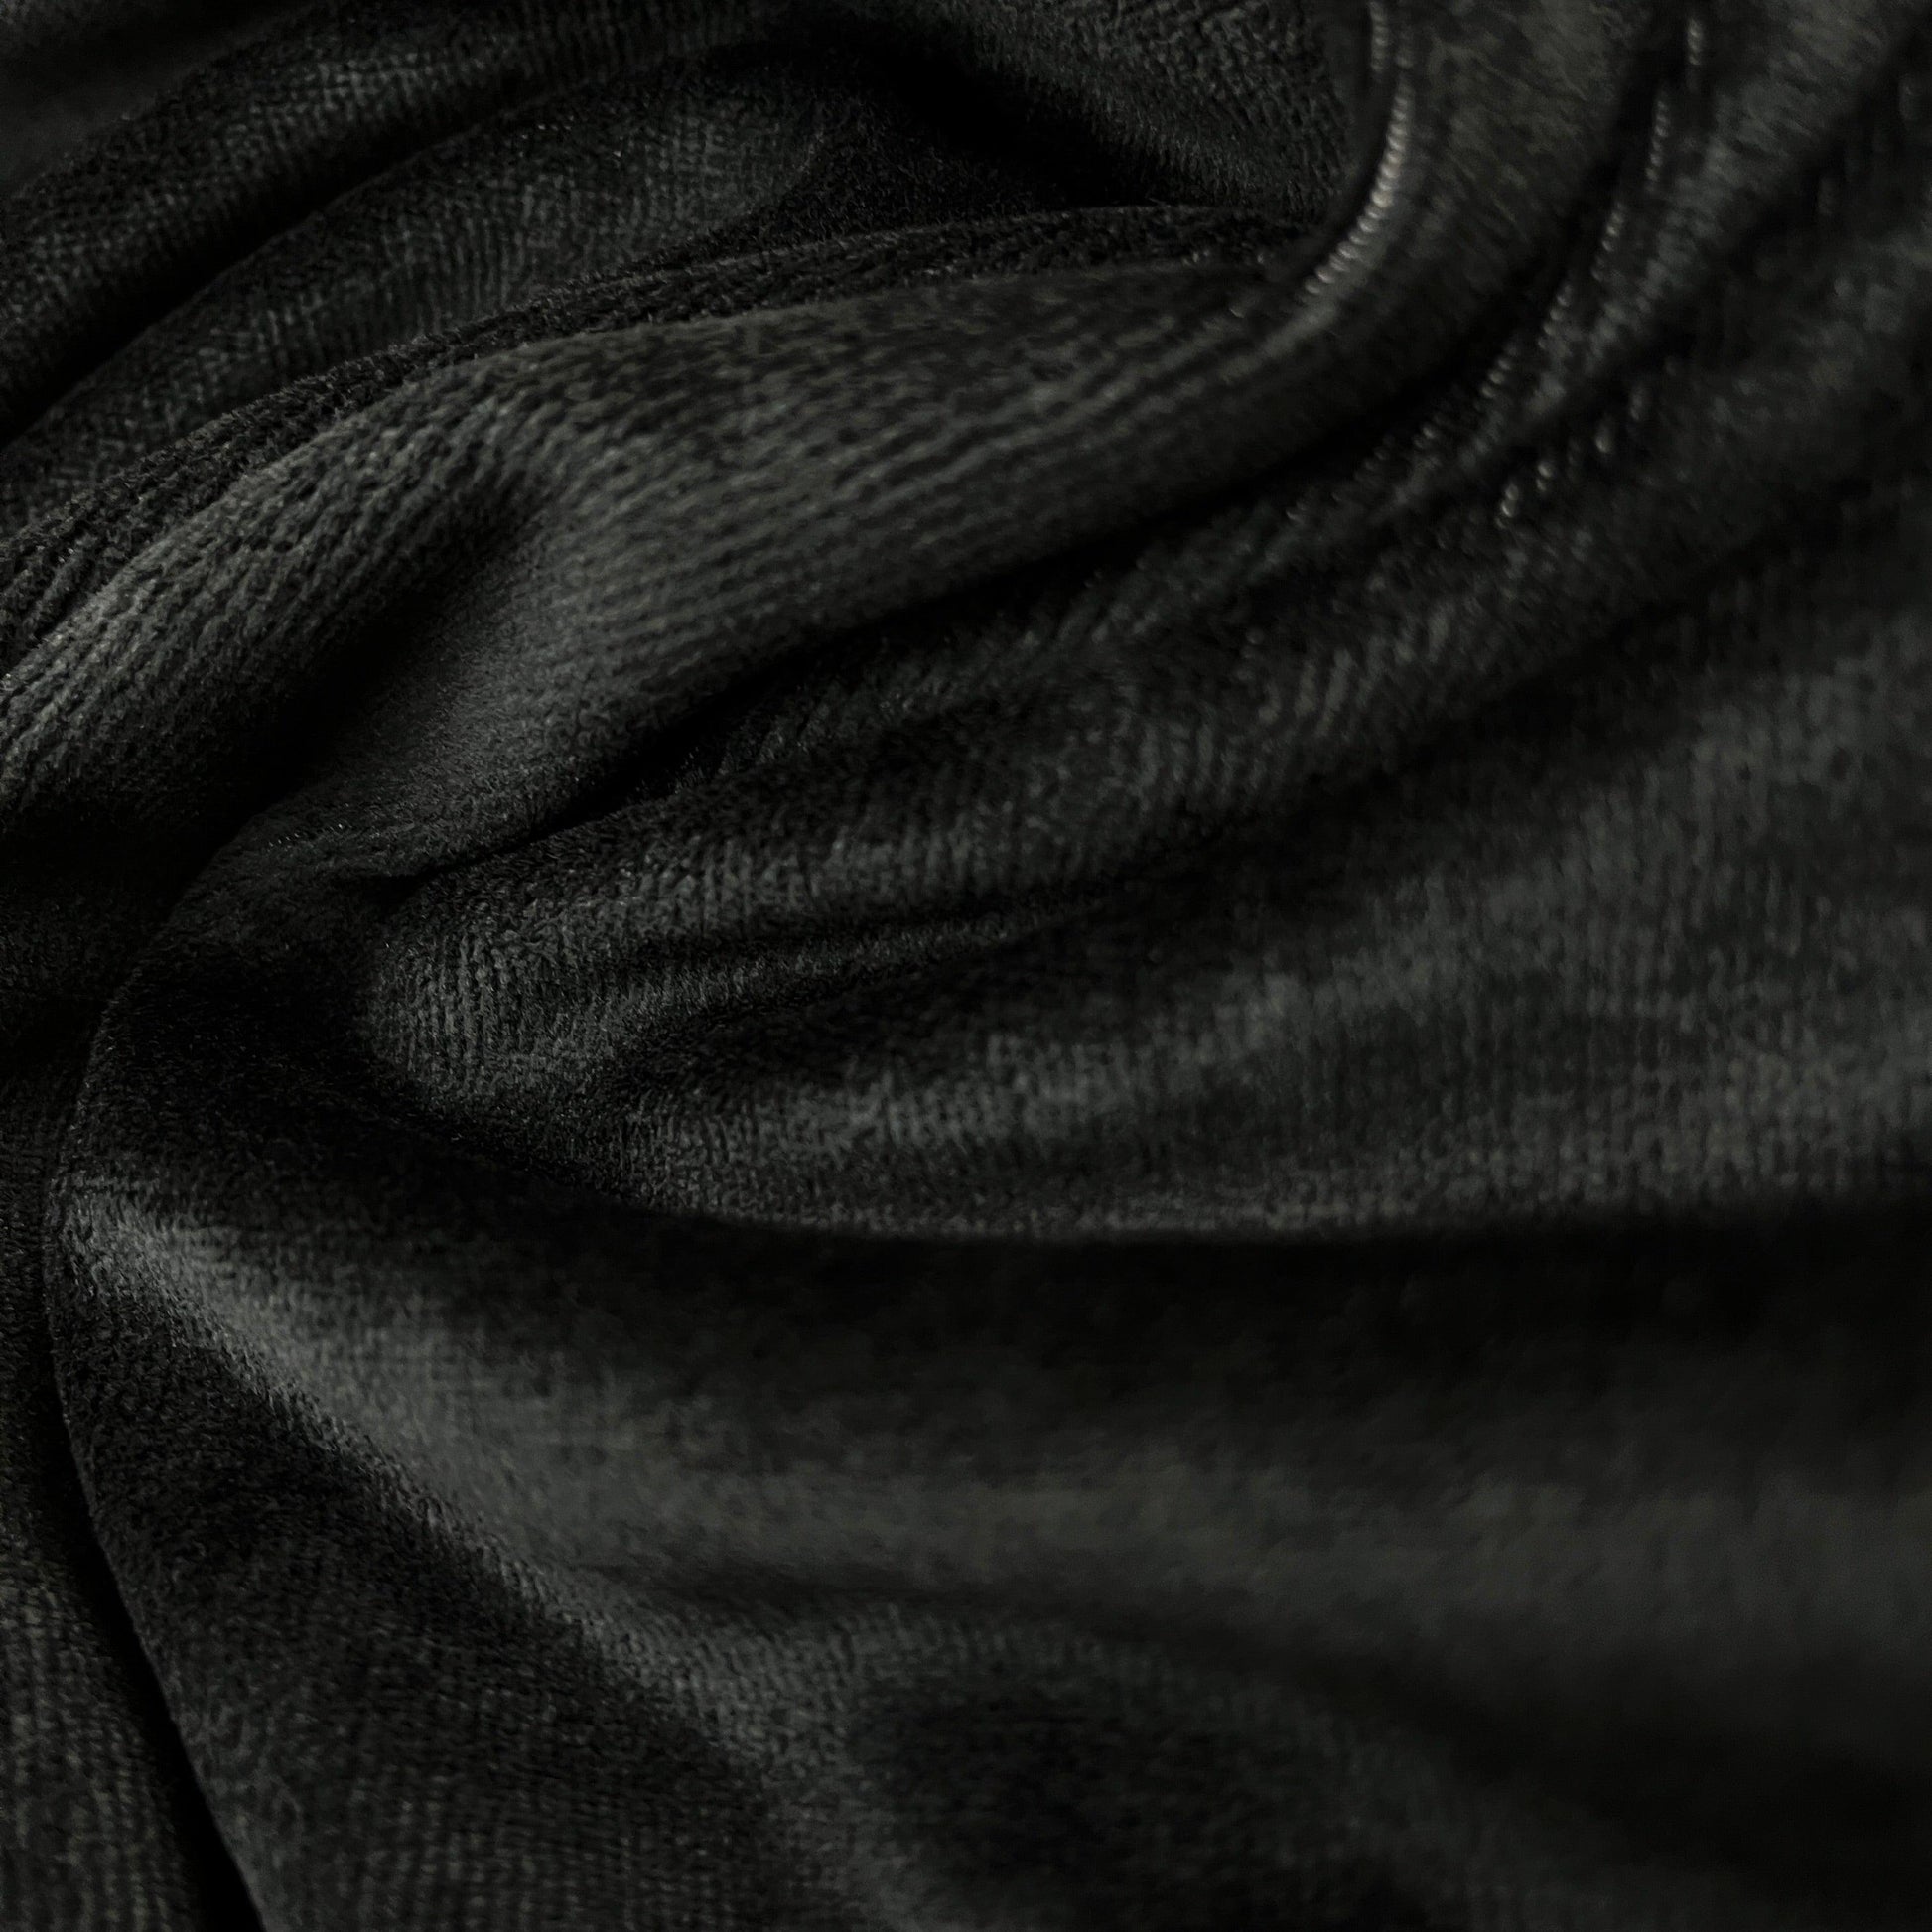 Black Bamboo Velour Fabric - 280 GSM, $11.91/yd, 15 Yards - Nature's Fabrics